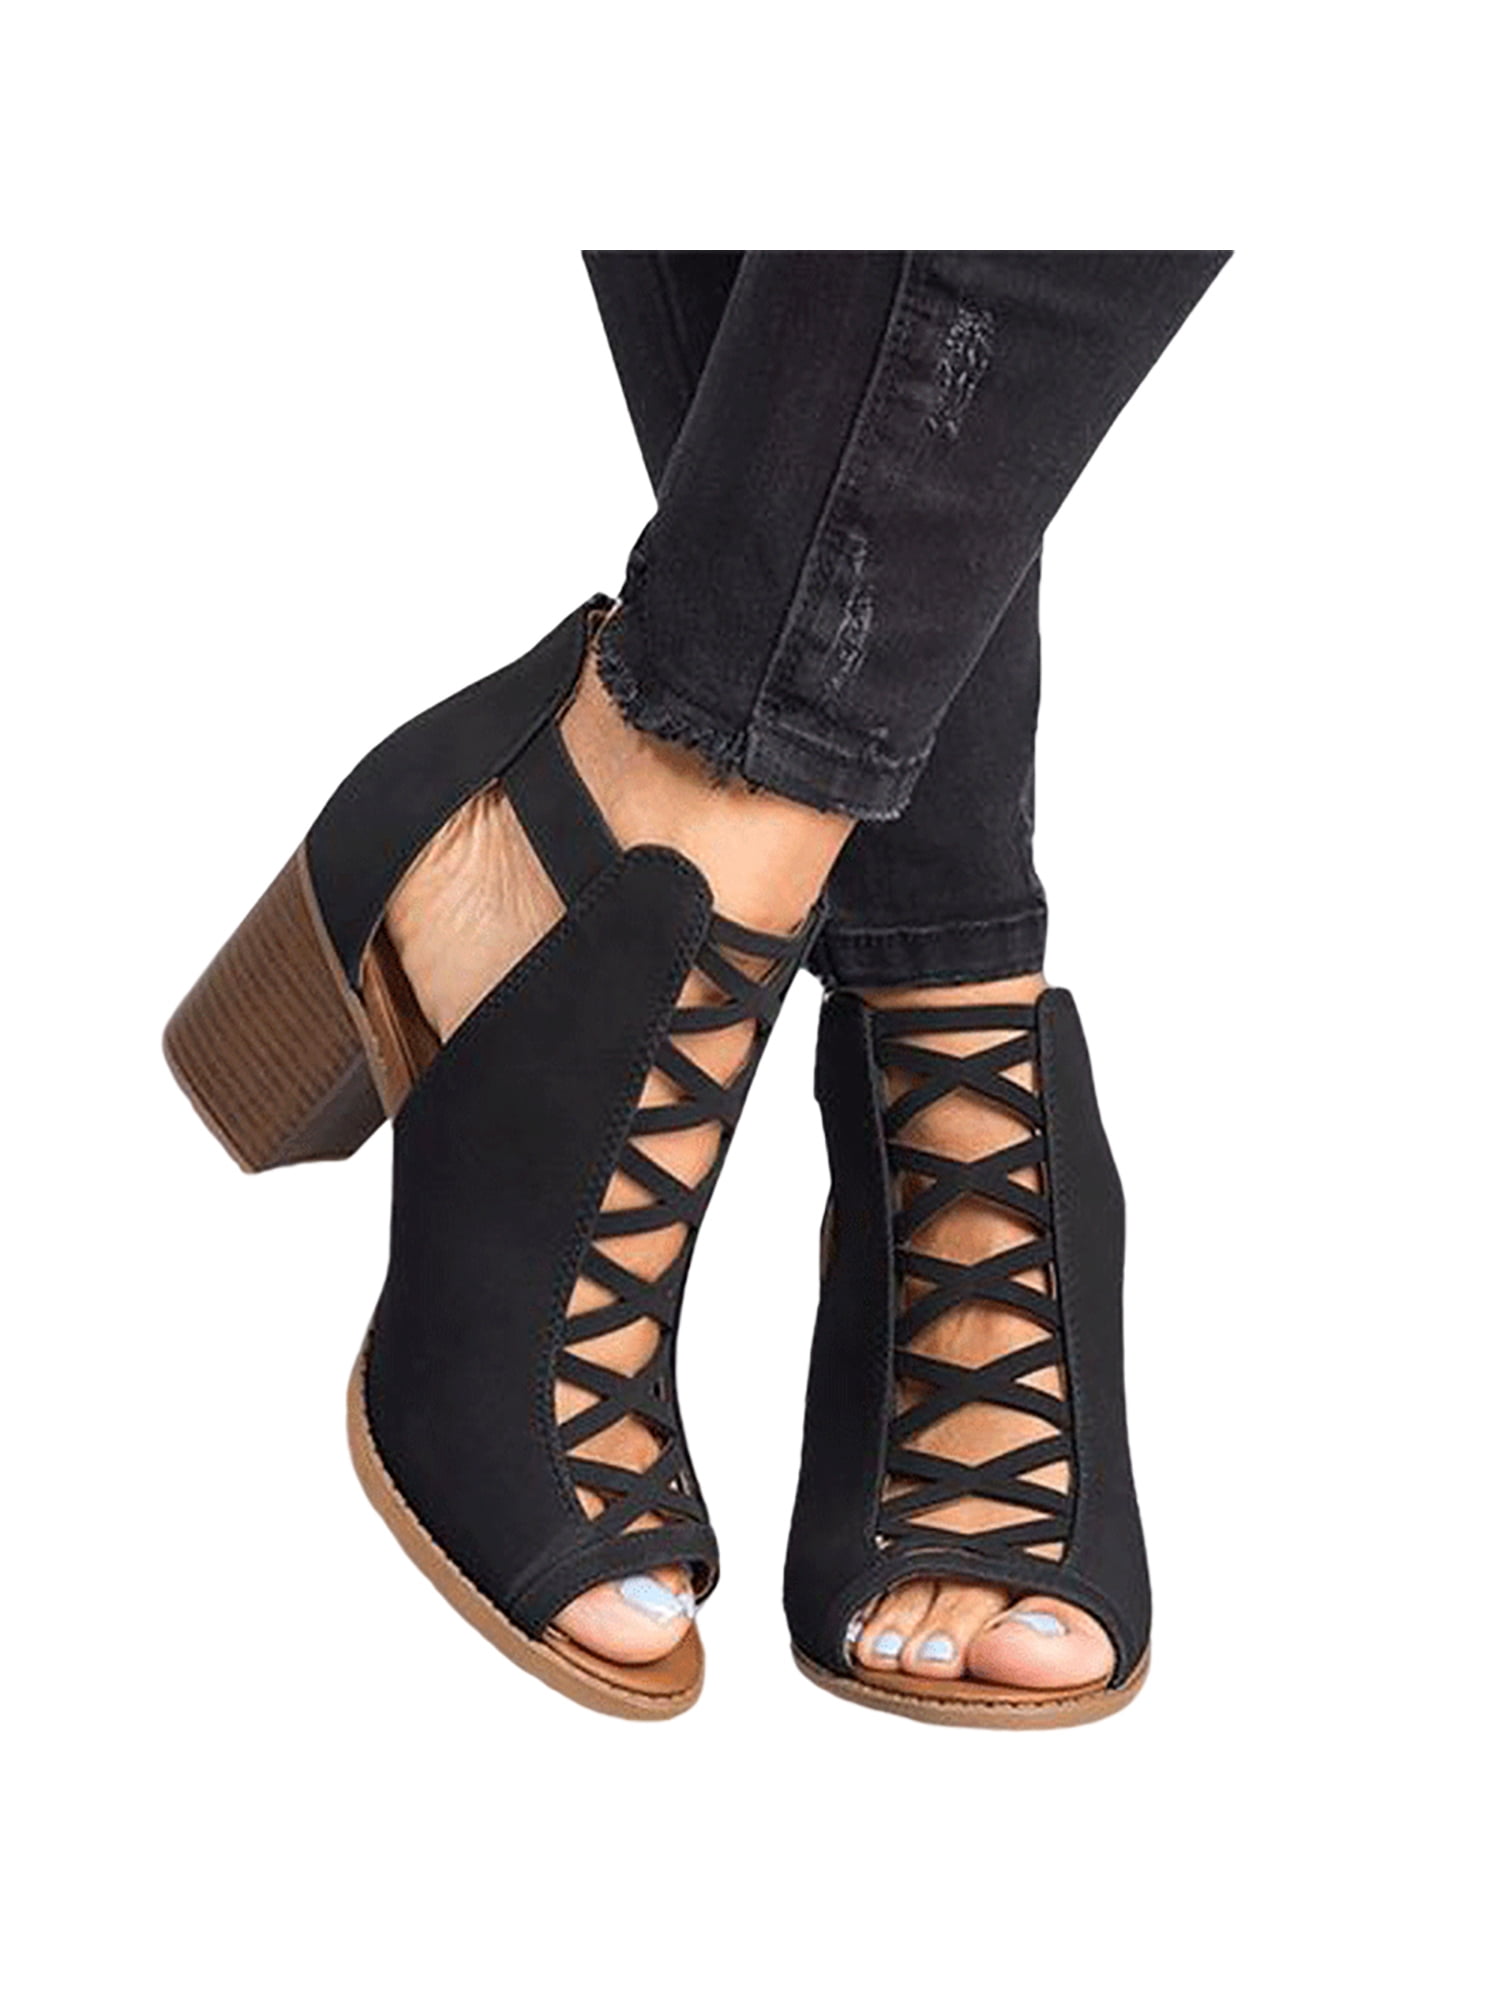 Womens Zipper Slingbacks Peep Toe Ankle Boots Ladies High Block Heel Shoes Size 